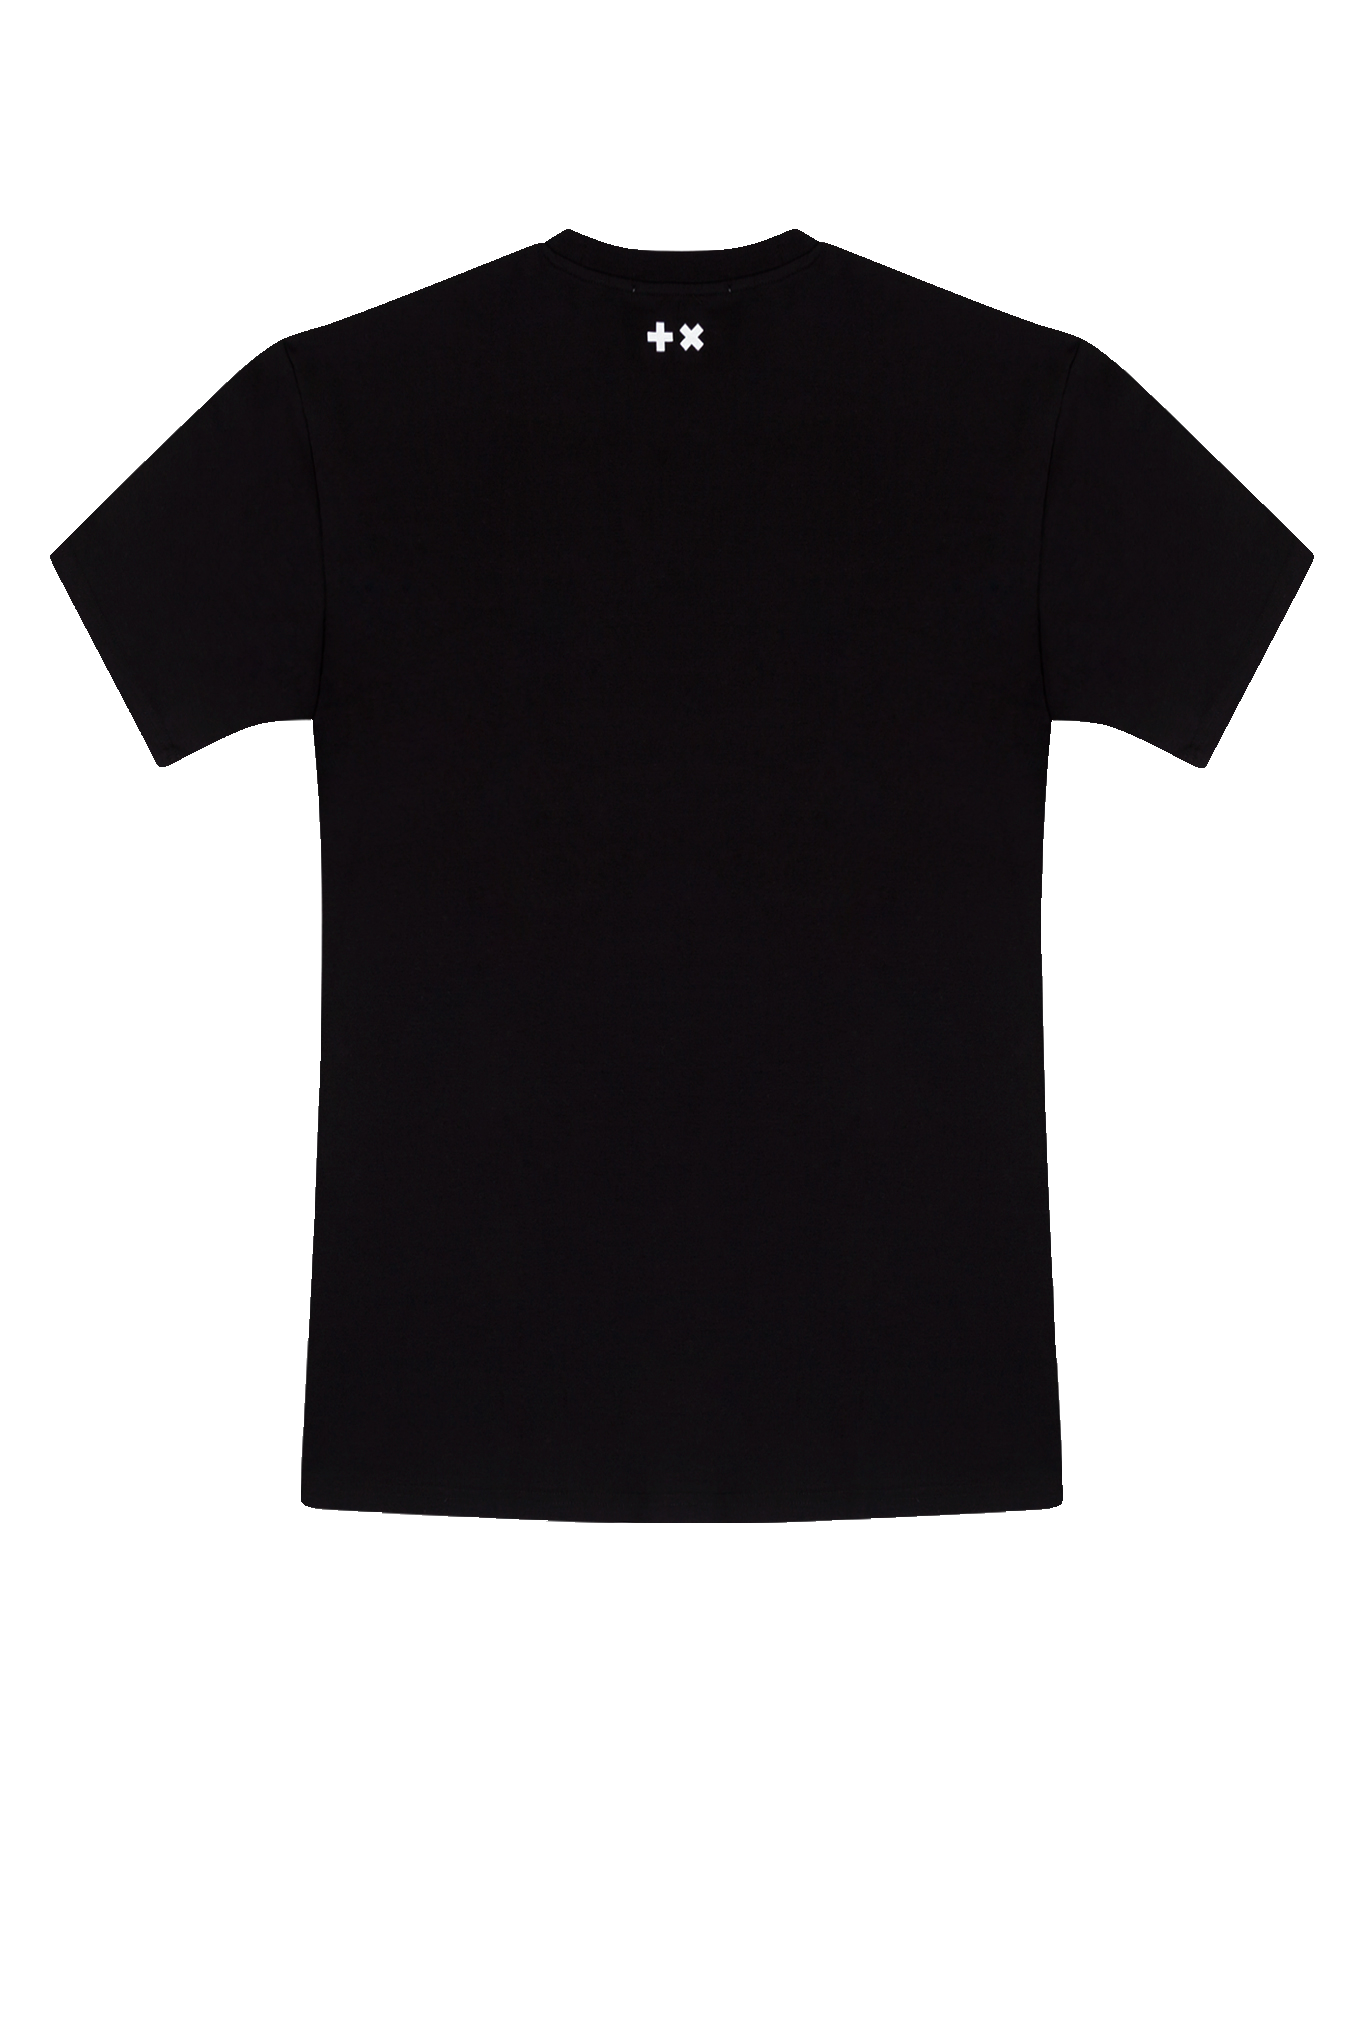 Plain Black T-Shirt PNG Download Image